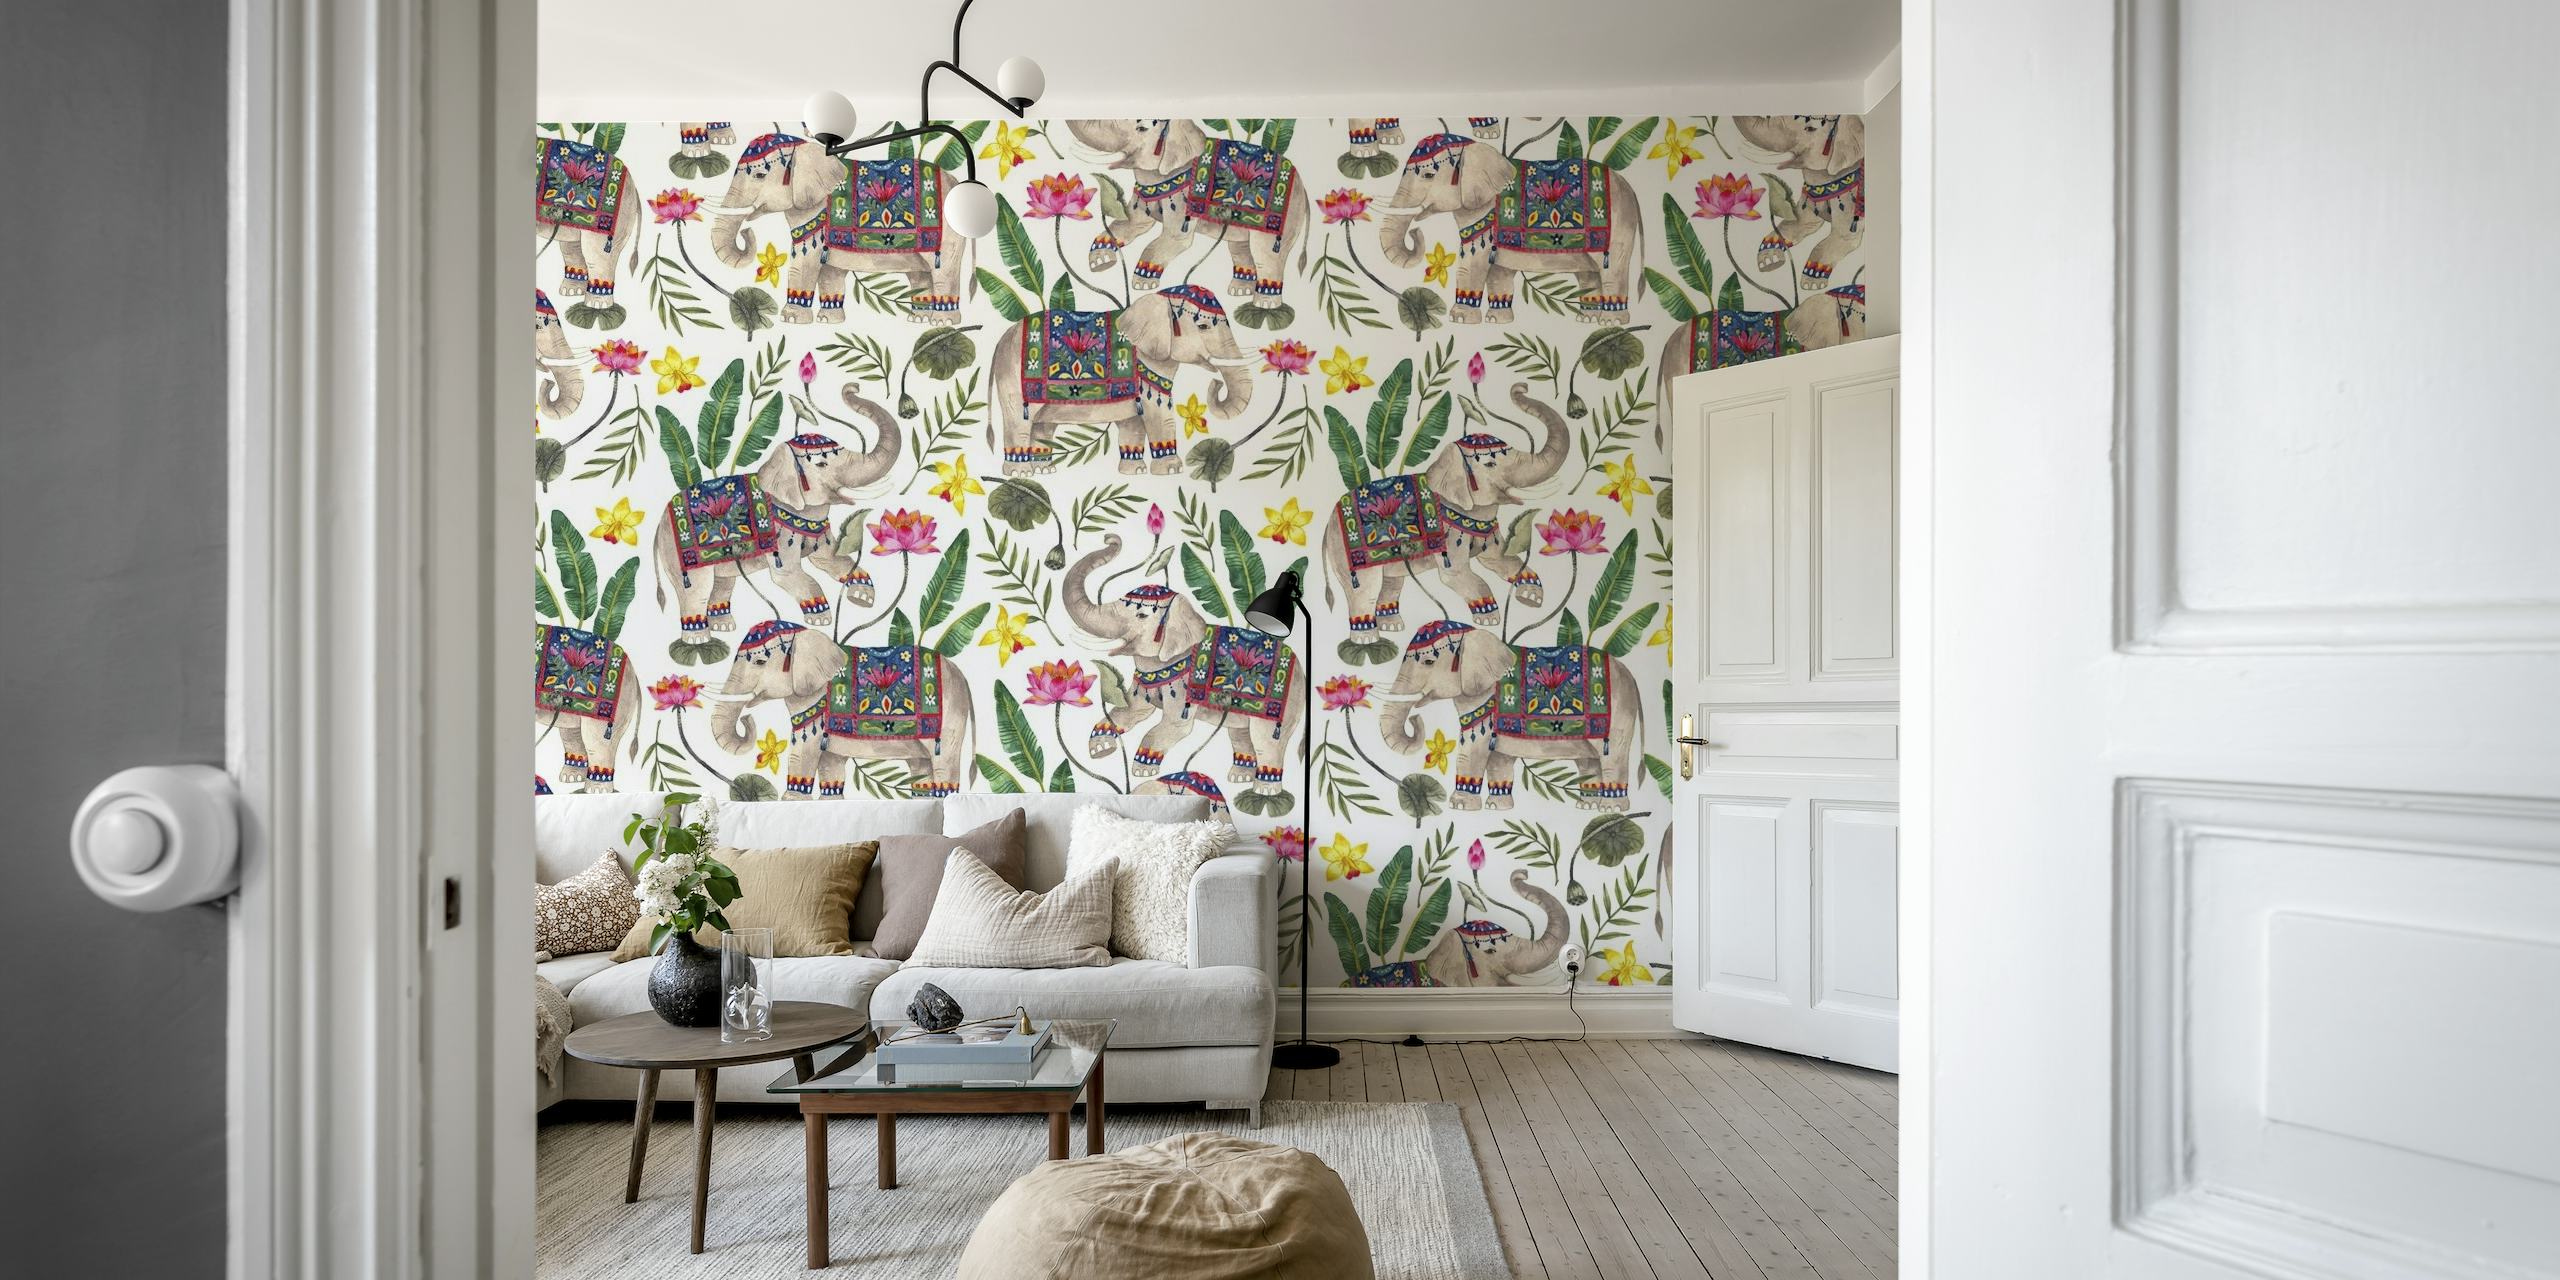 Elephants with Banana leaves wallpaper